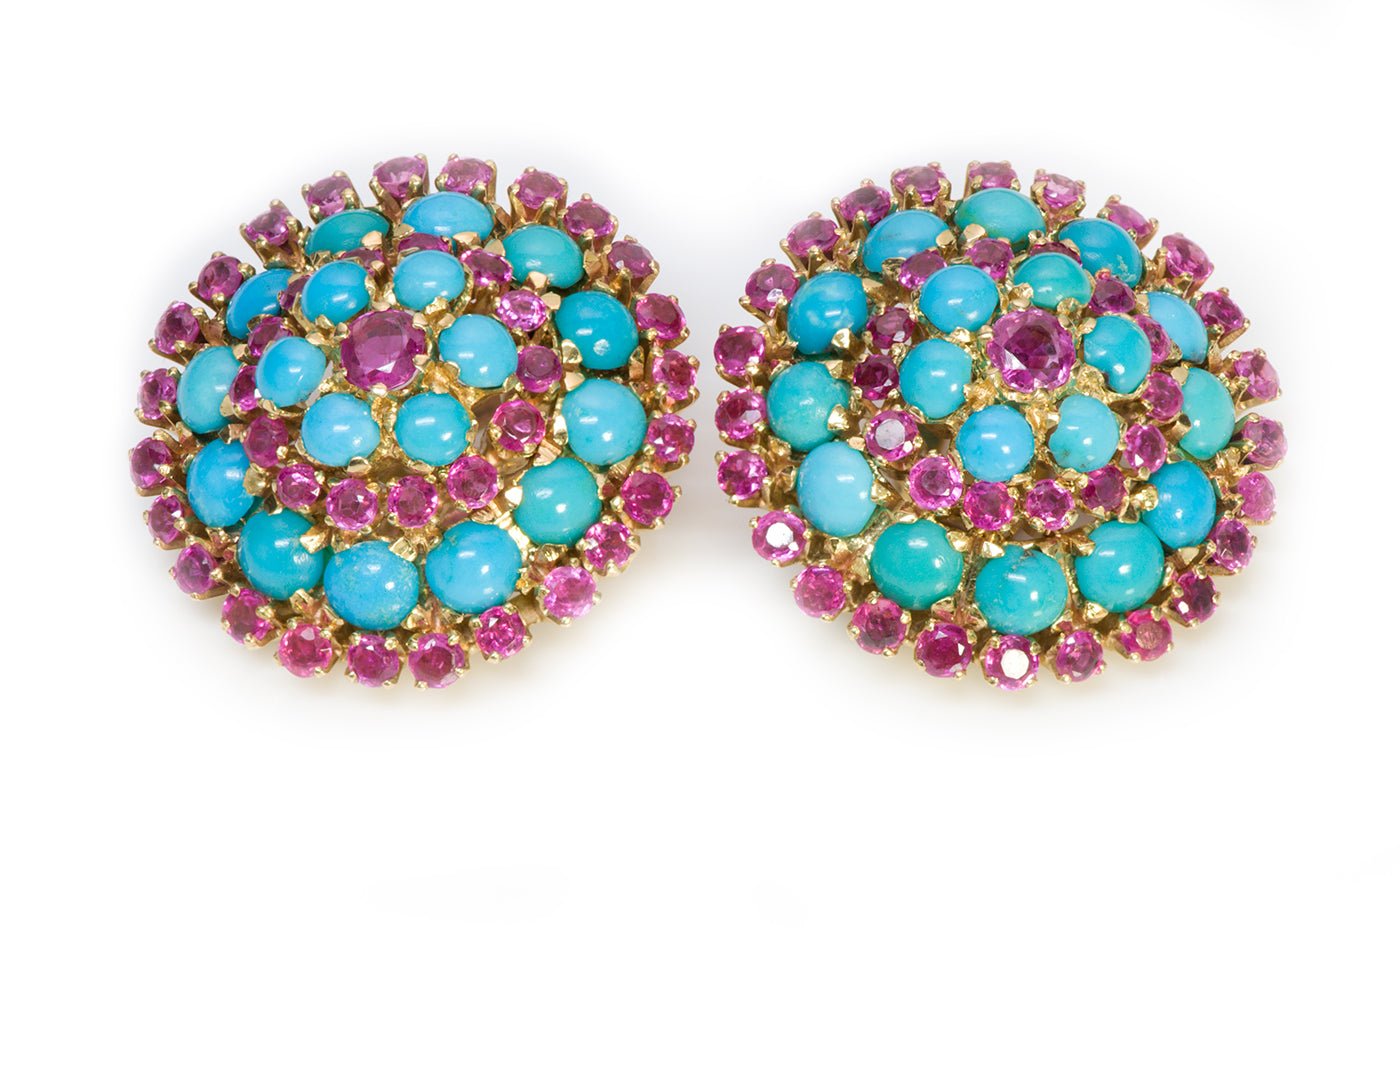 Spritzer & Fuhrmann 18K Gold Ruby Turquoise Earrings